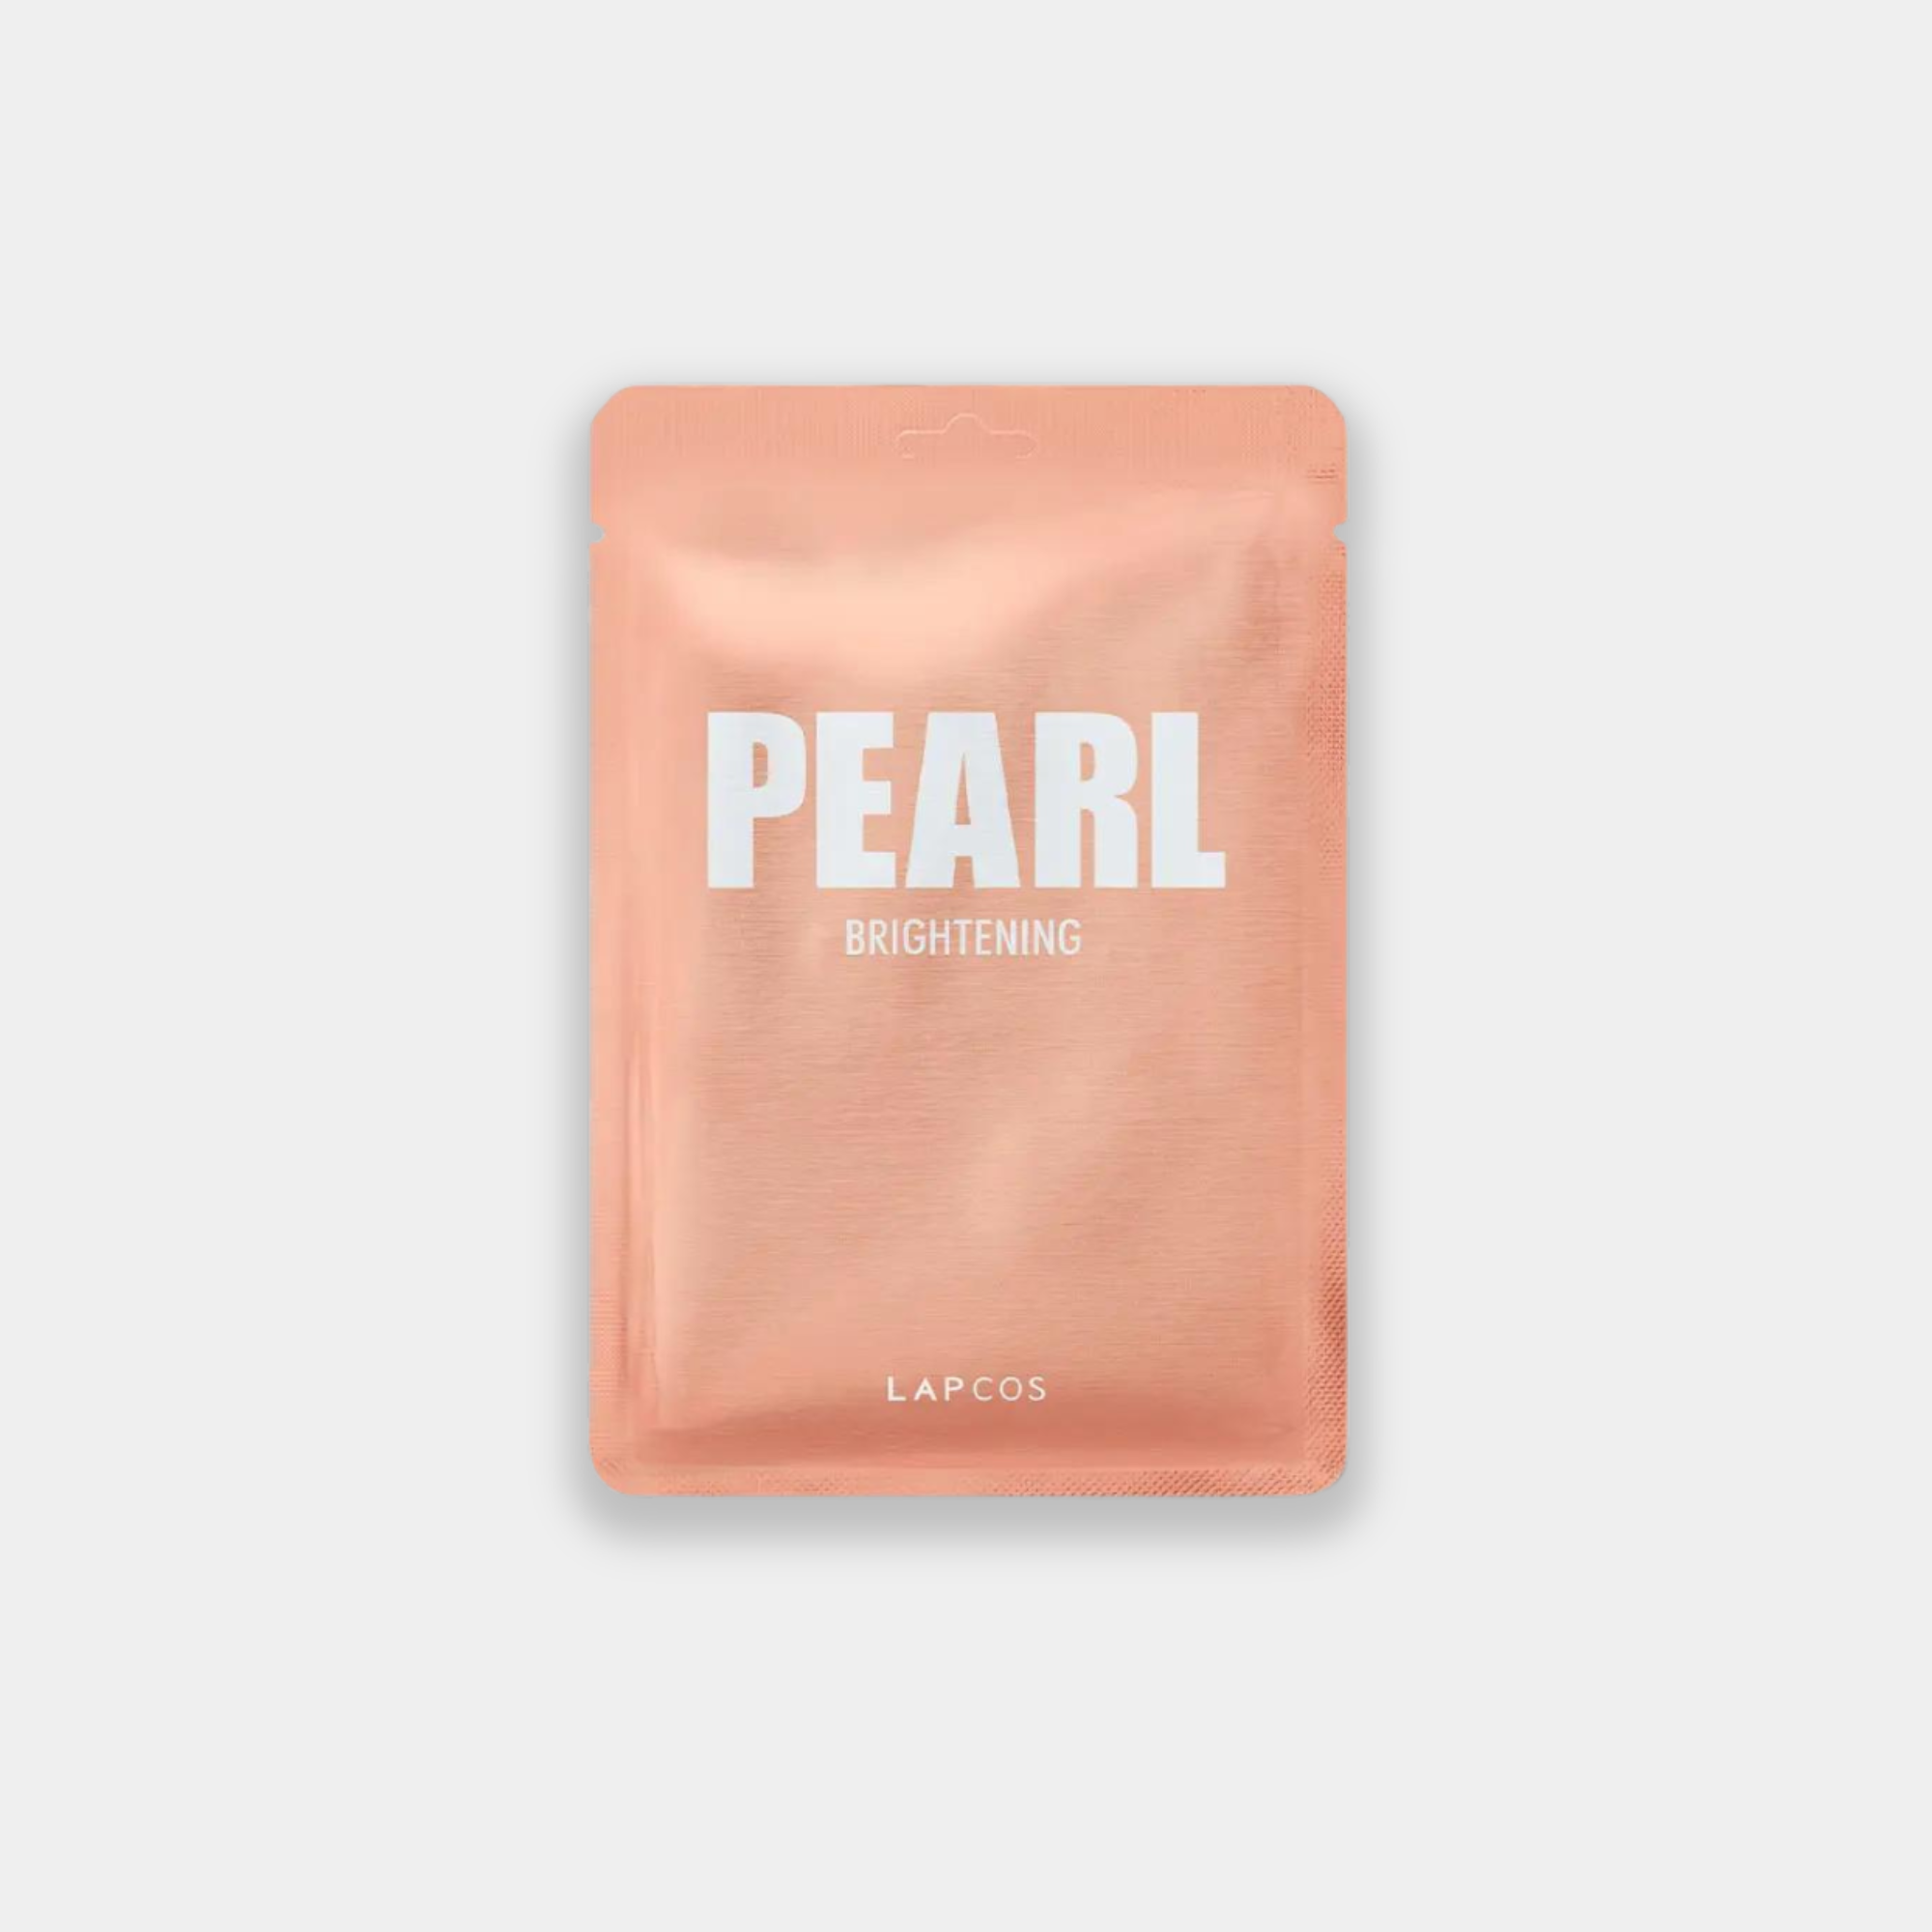 Pearl sheet mask | COMING SOON